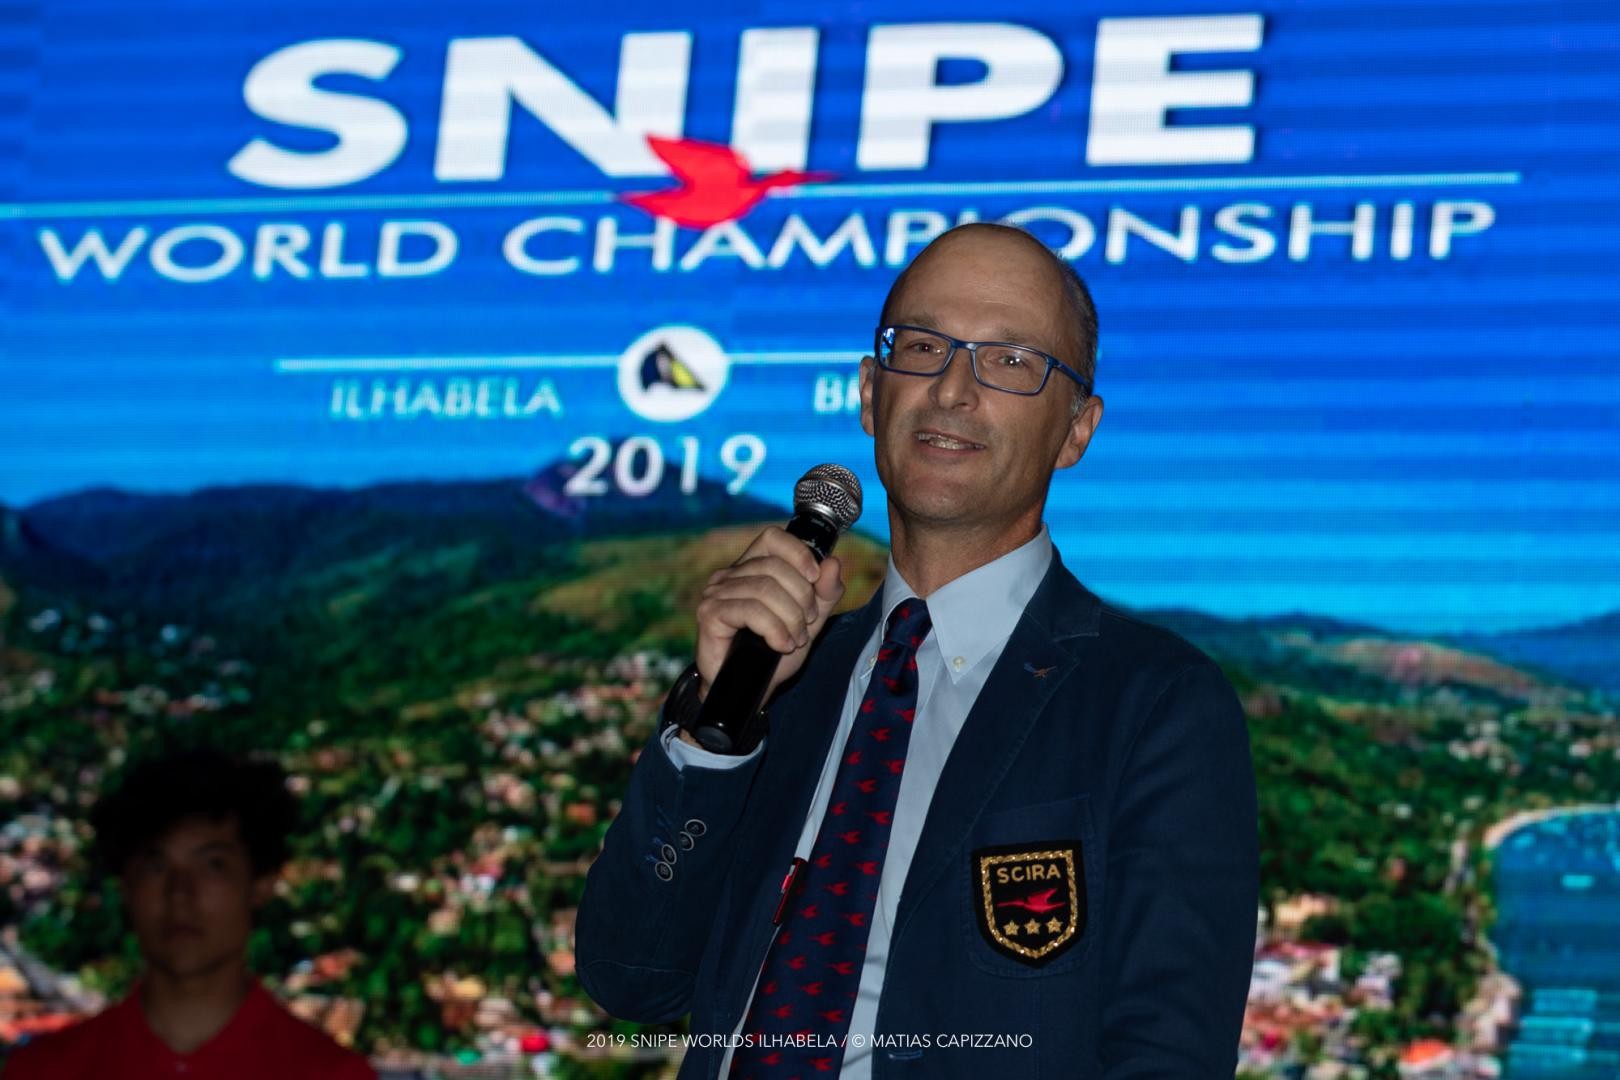 The 2019 Snipe World Championship starts tomorrow in Ilhabela, Brazil